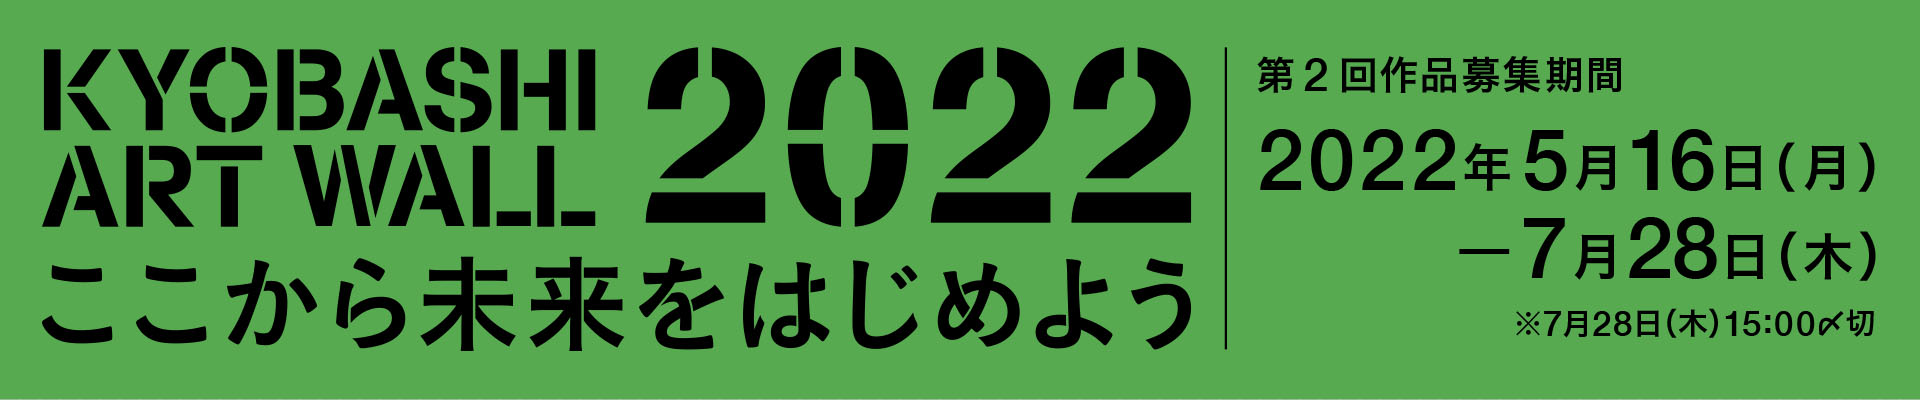 KYOBASHI ART WALL 2022 ここから未来をはじめよう